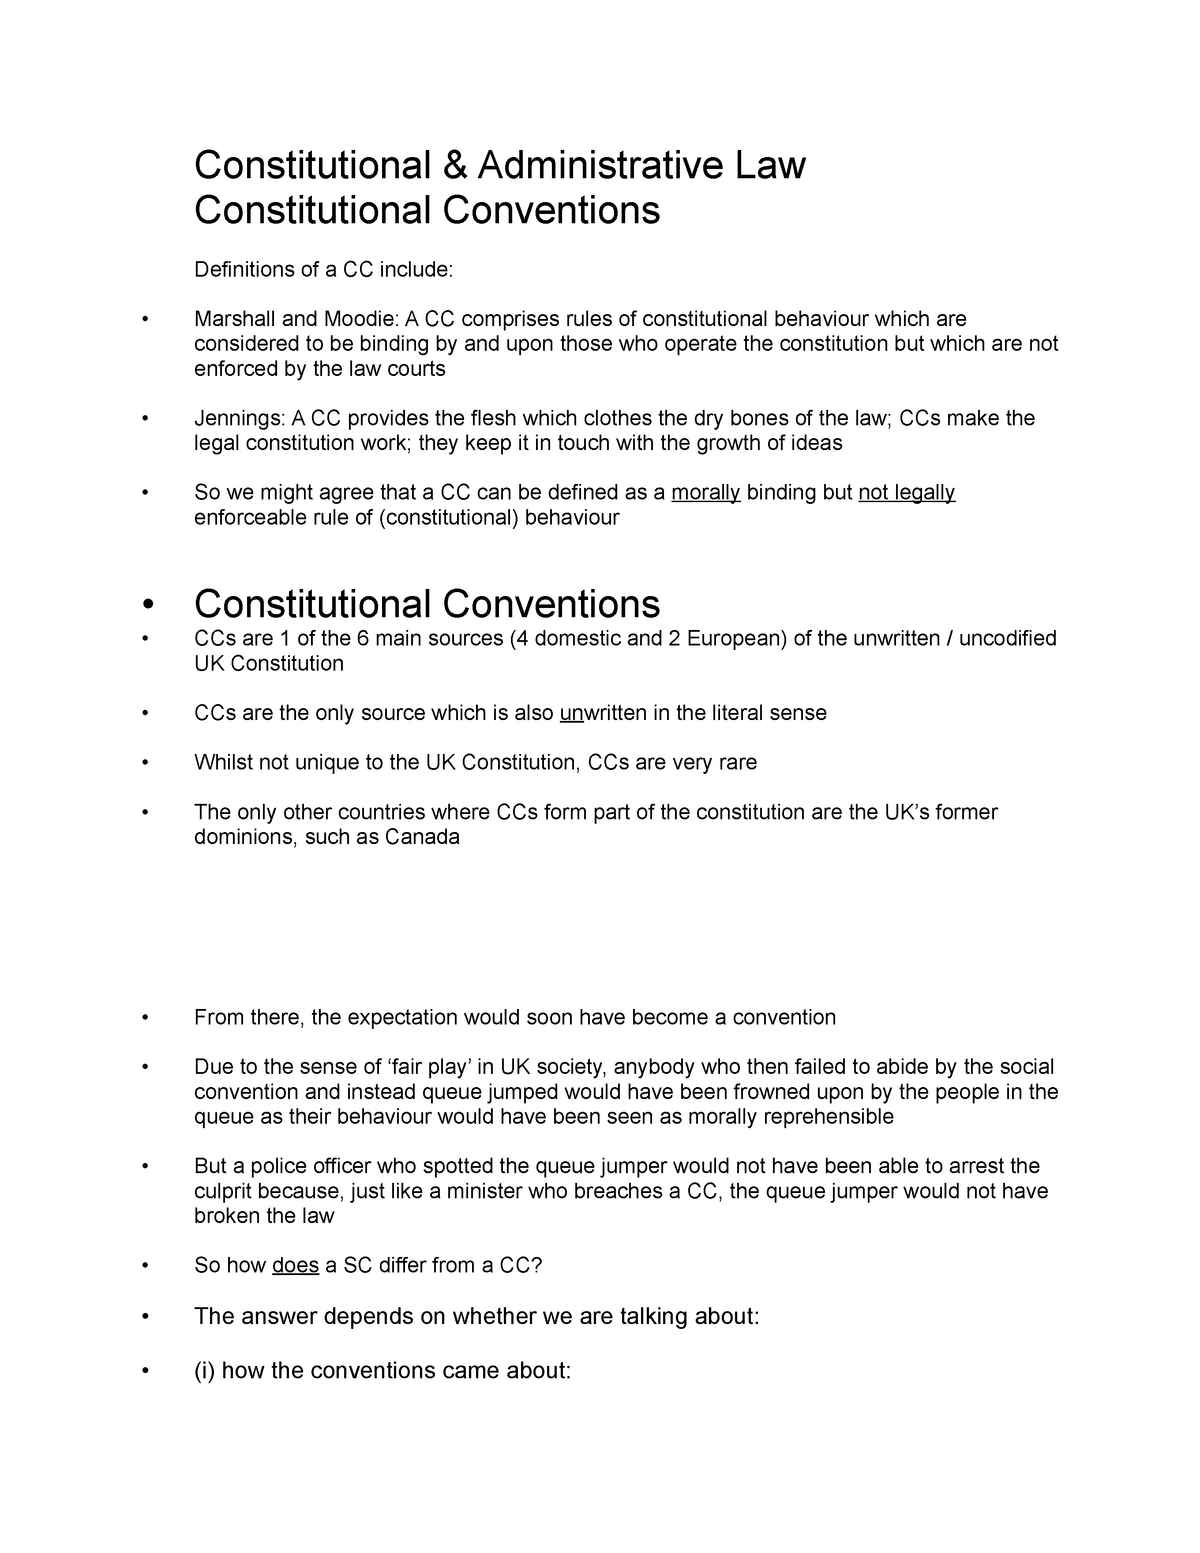 constitutional conventions essay